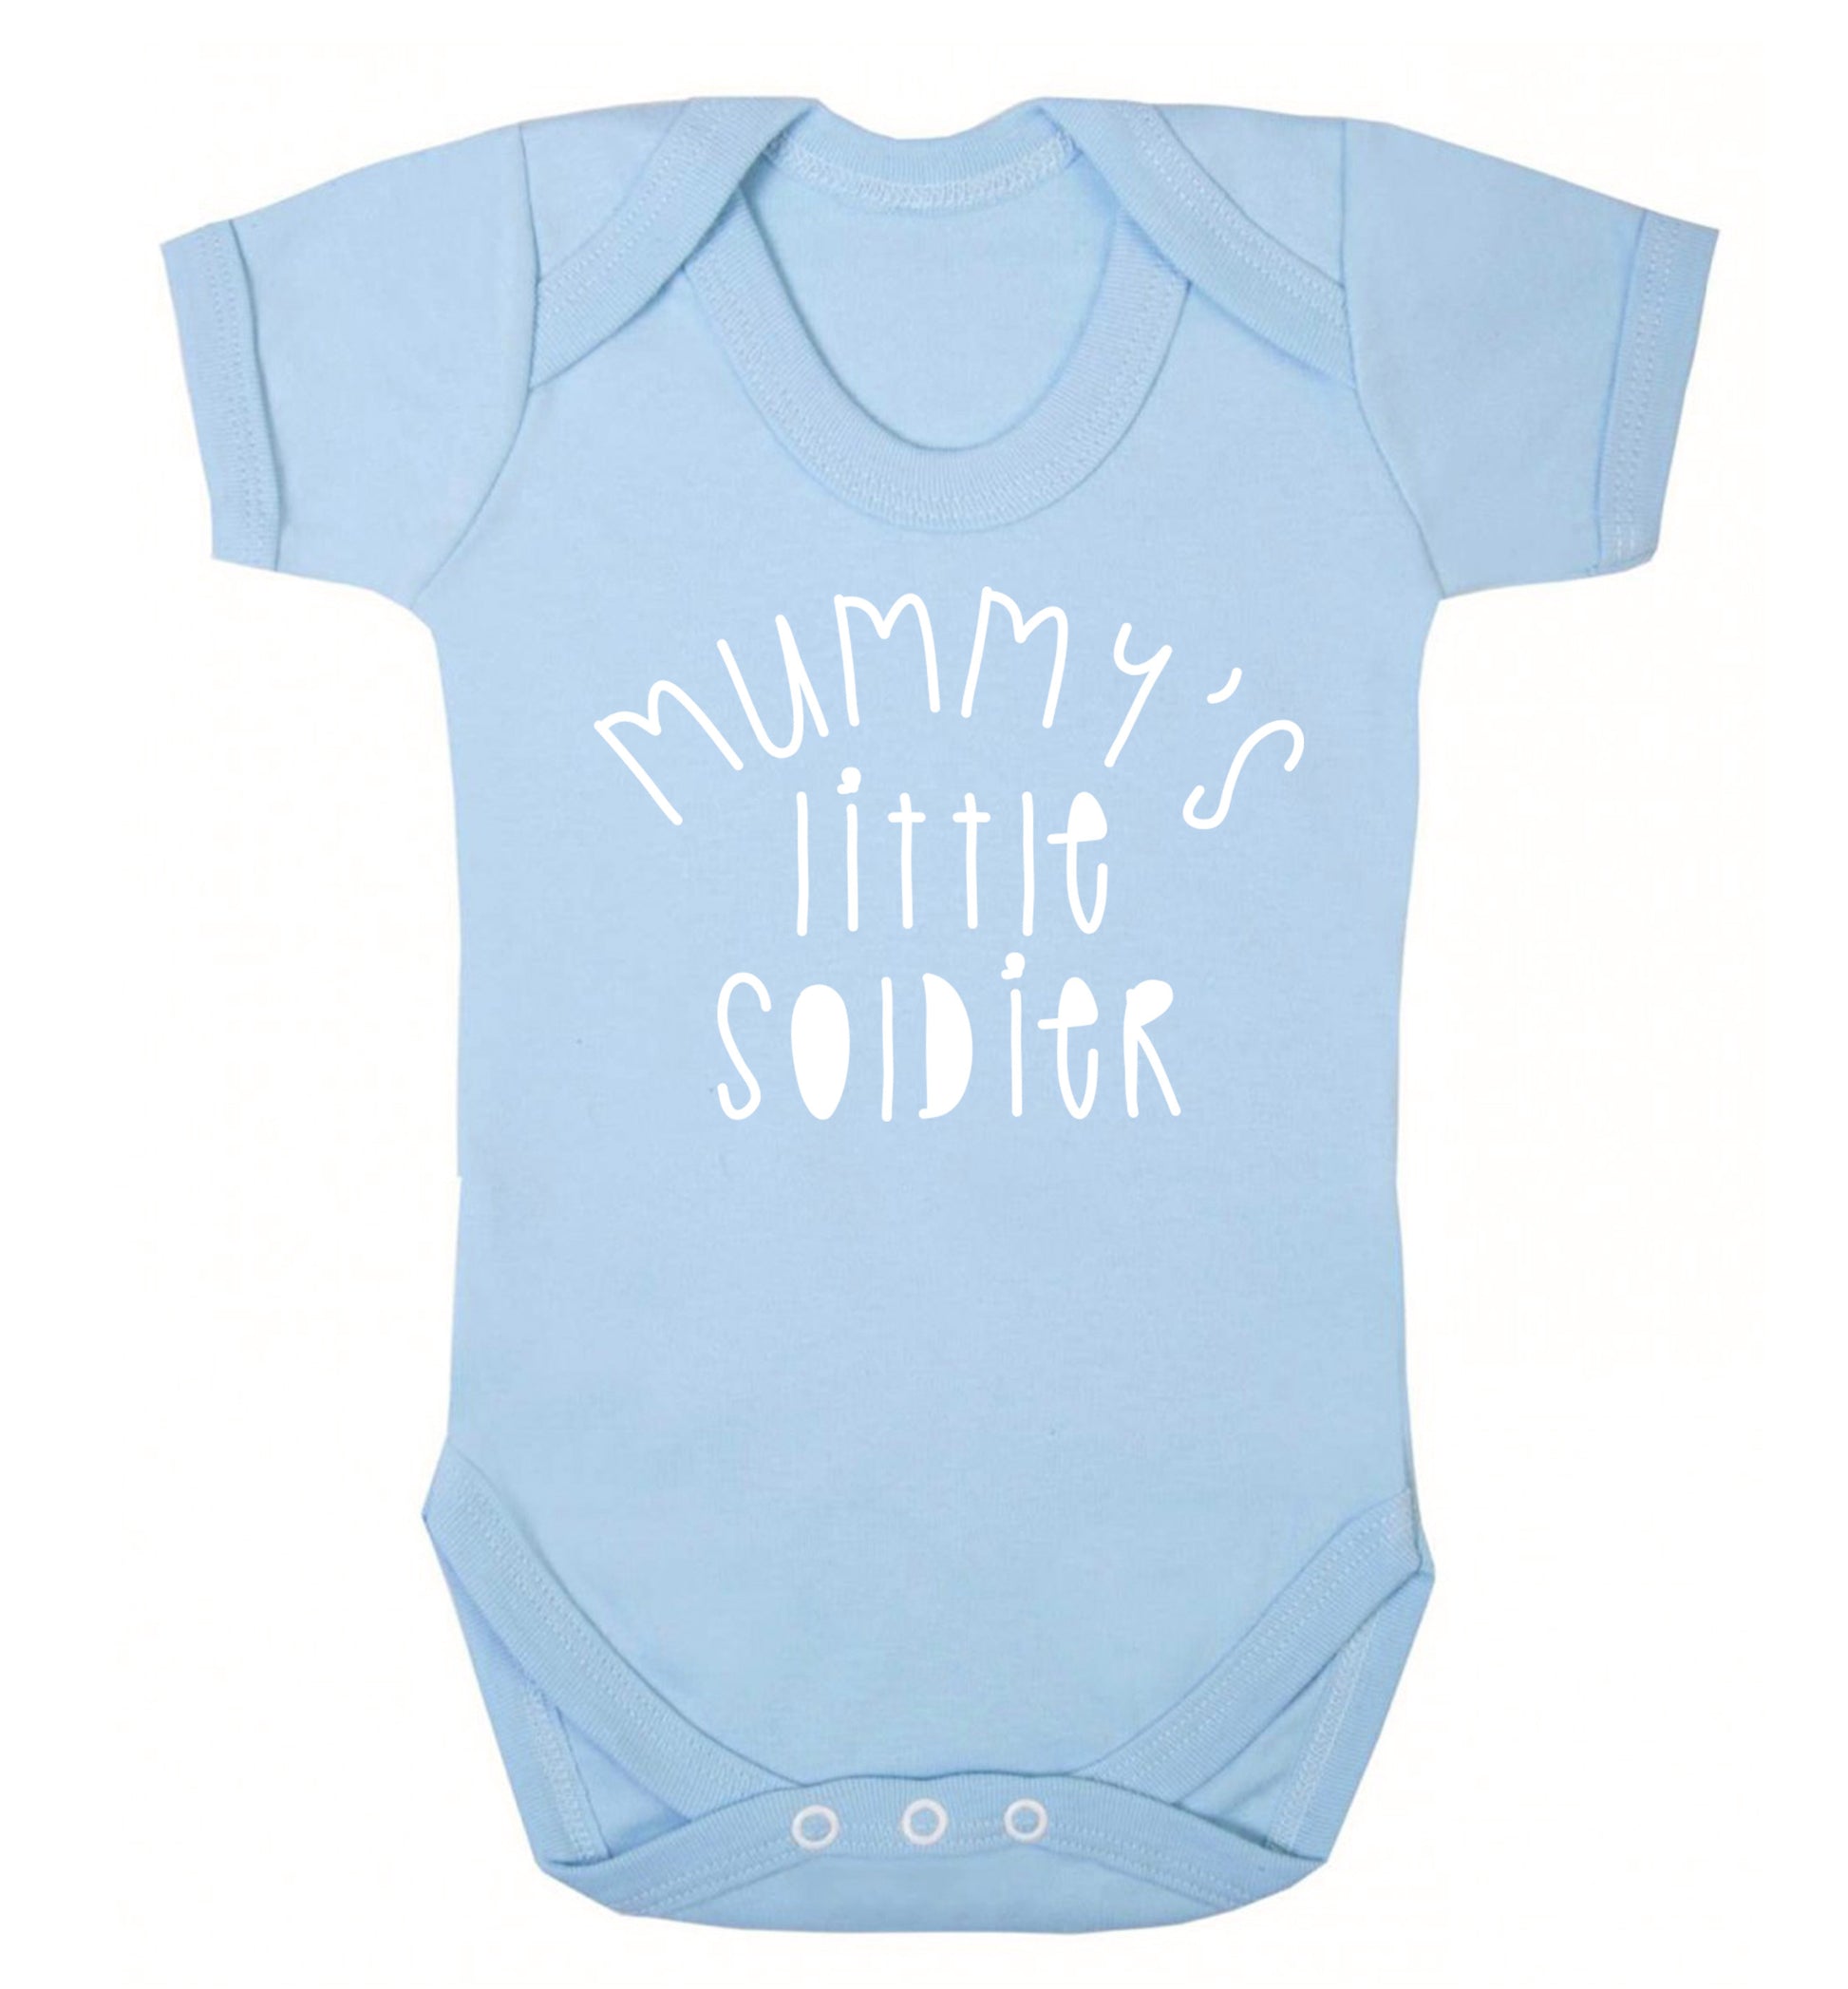 Mummy's little soldier Baby Vest pale blue 18-24 months